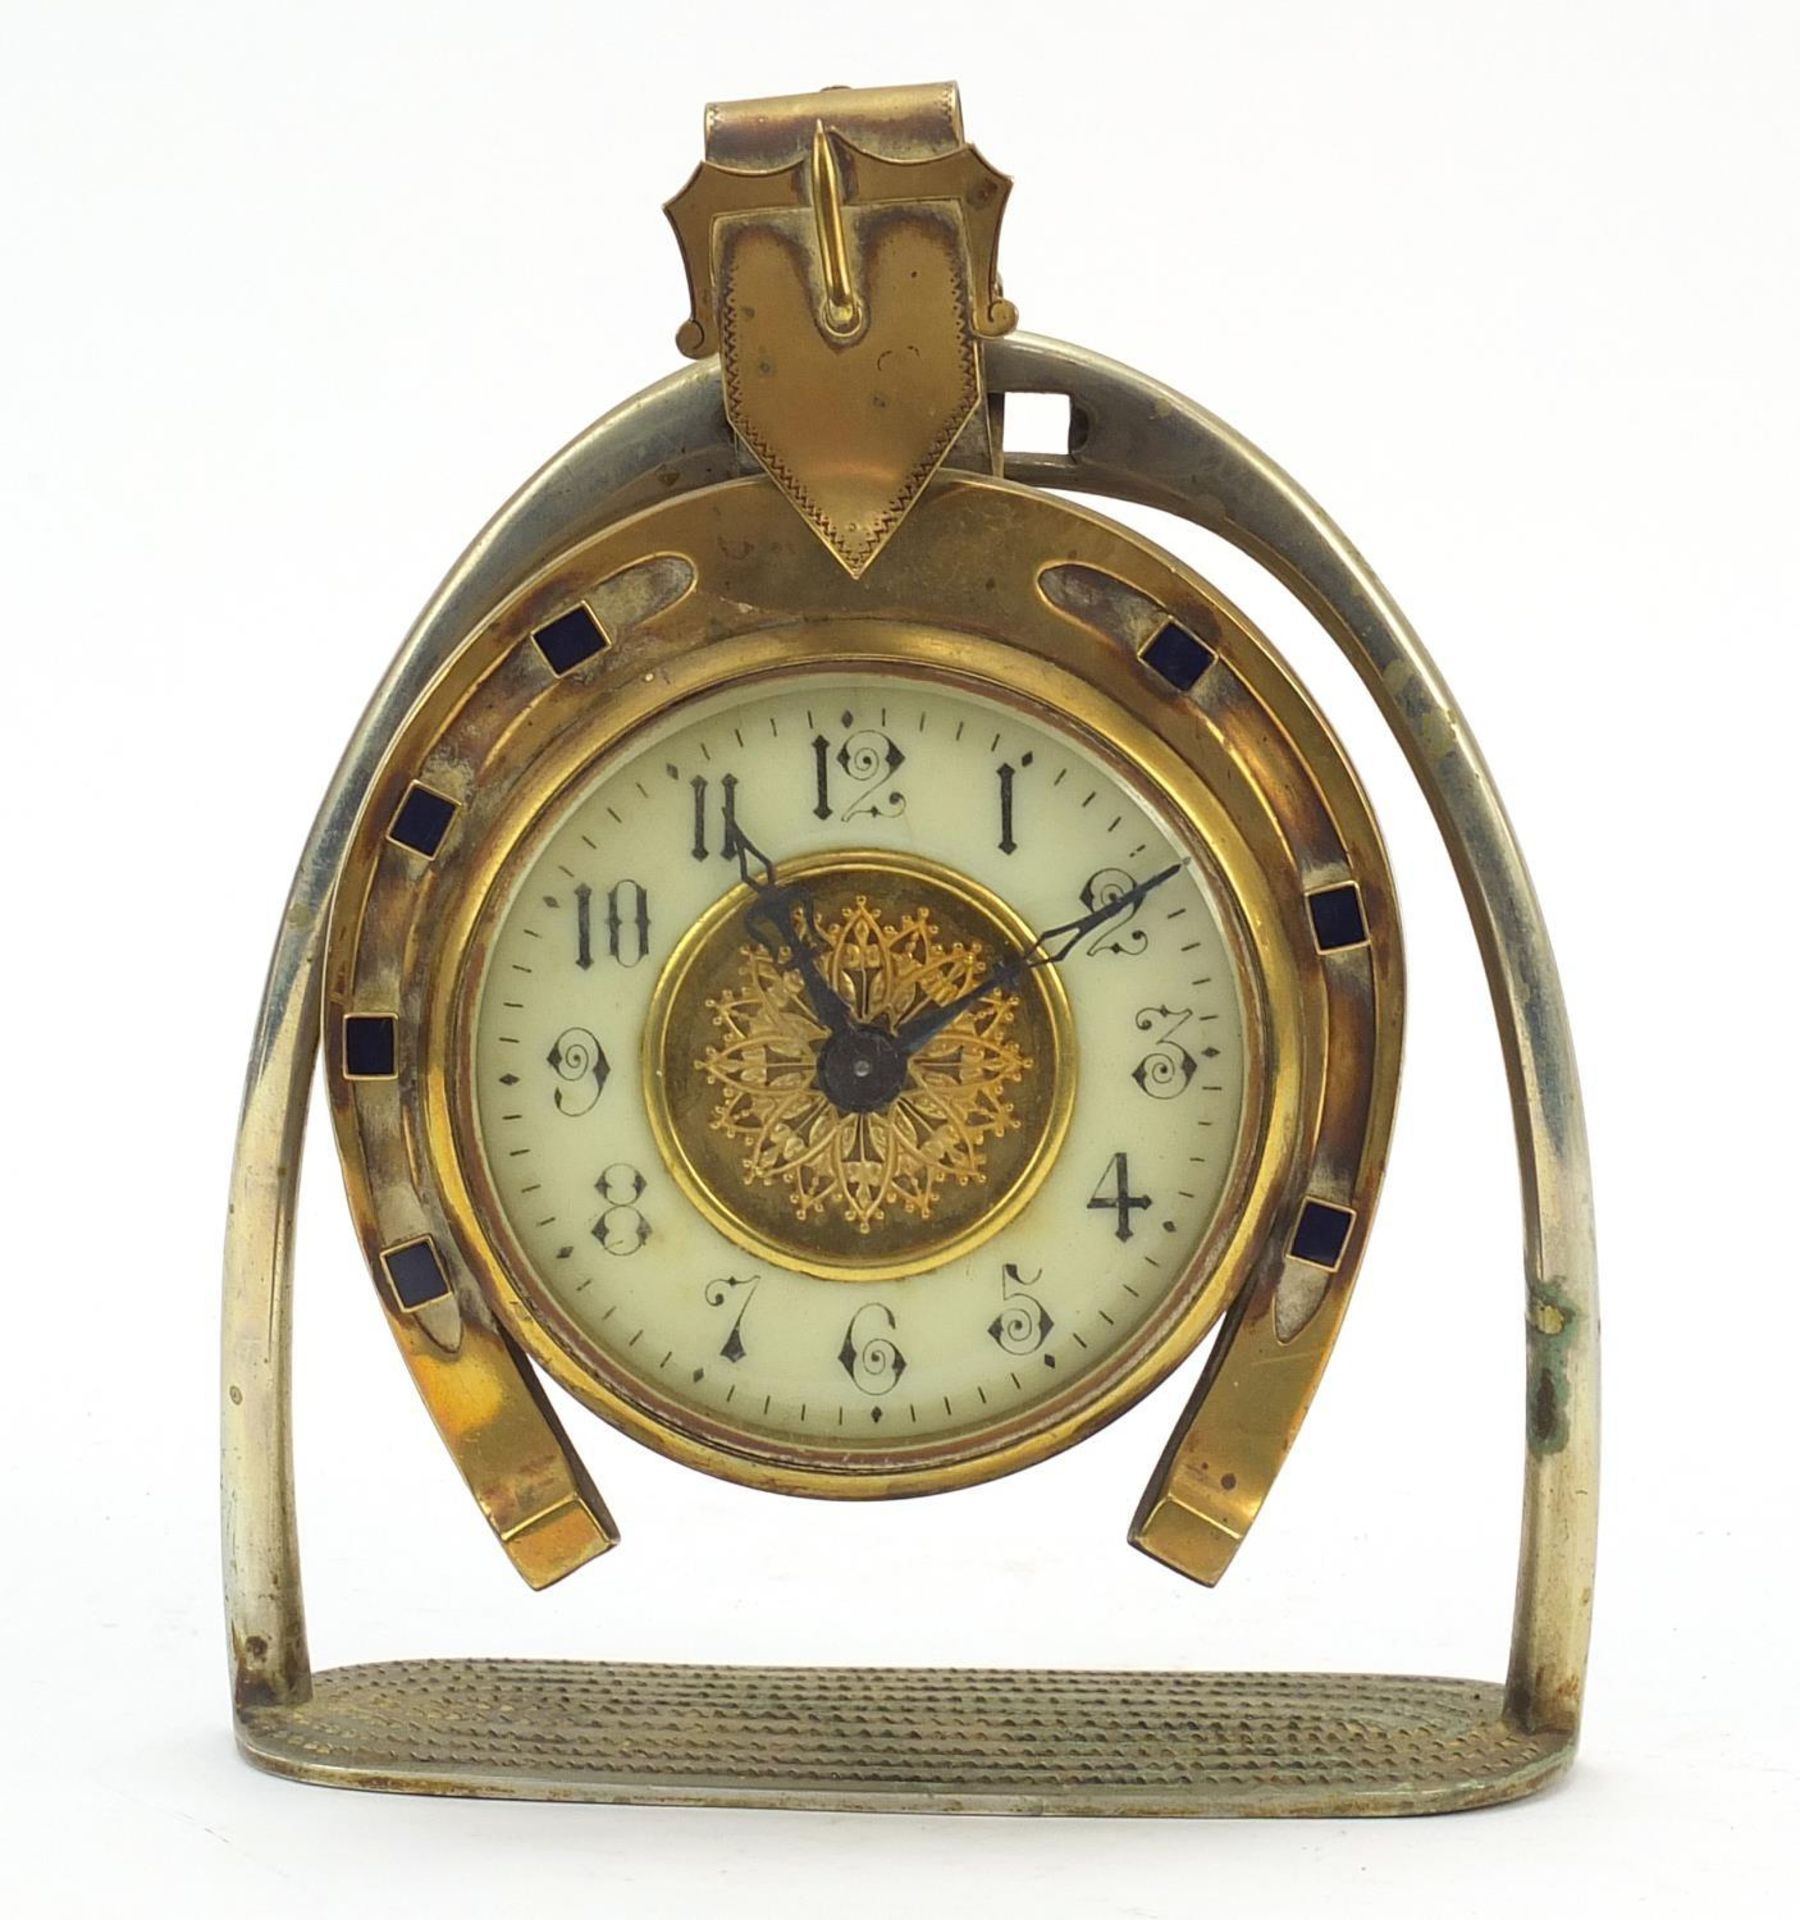 19th century horseshoe and stirrup design mantle clock with enamel dial having arabic numerals, 20cm